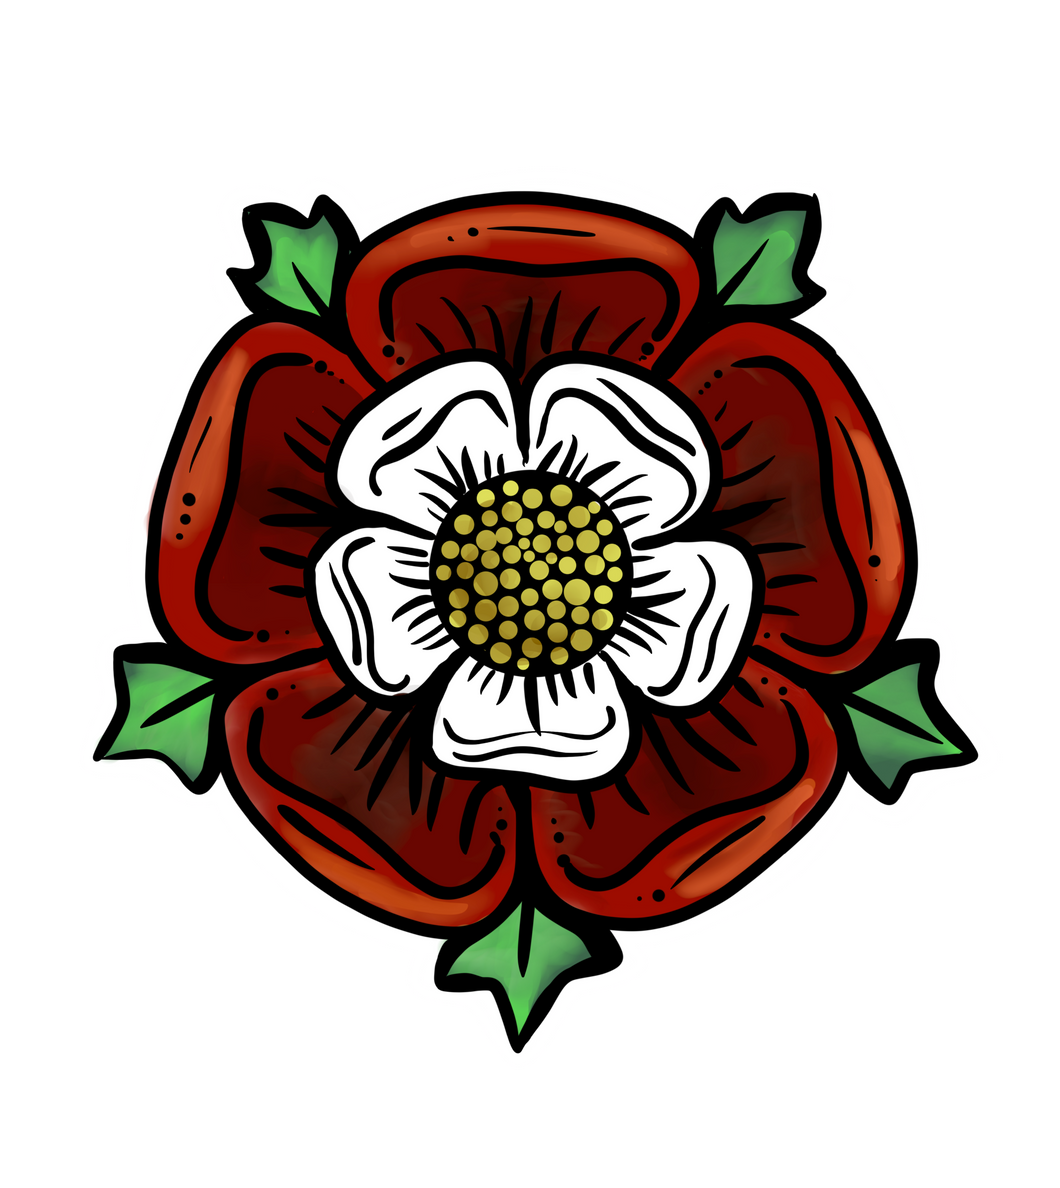 Faire Tidings - Tudor Rose Sticker